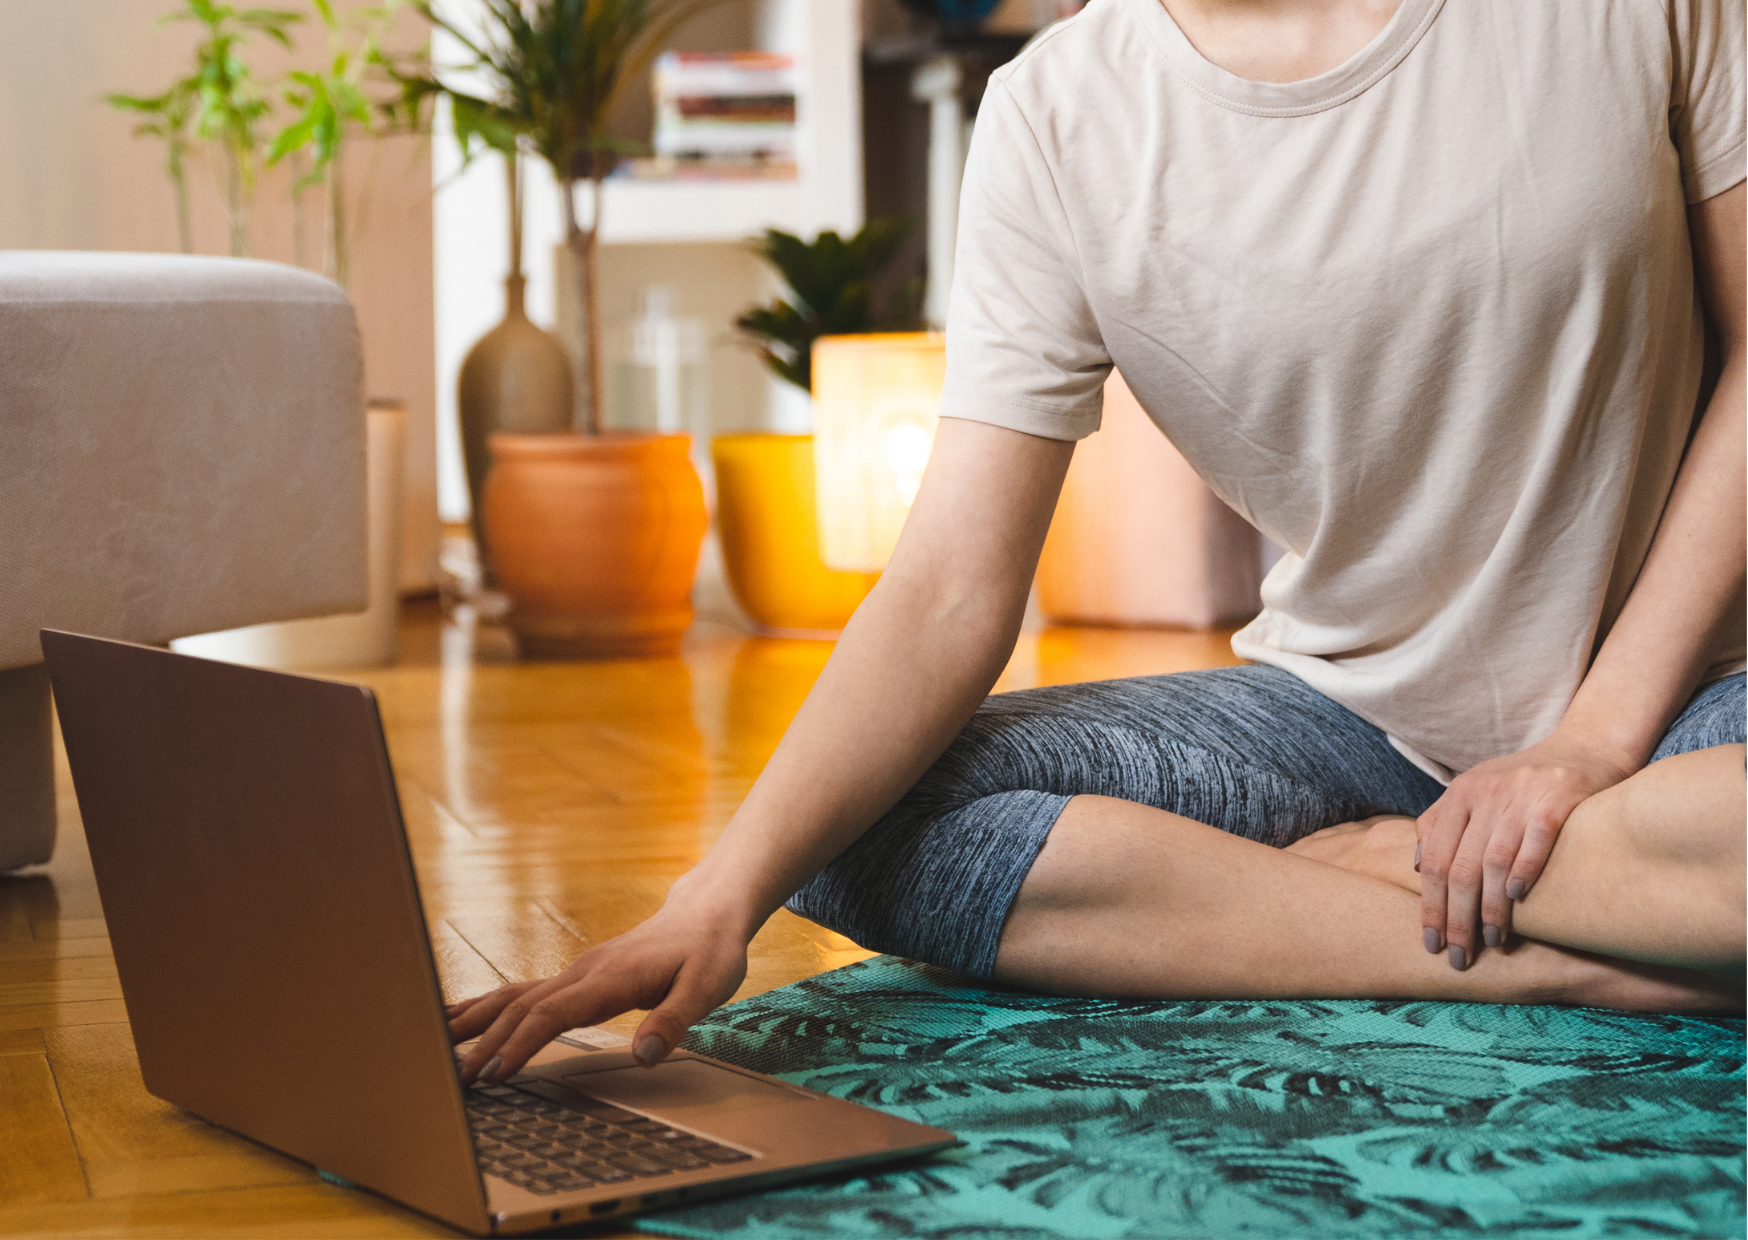 Online yoga